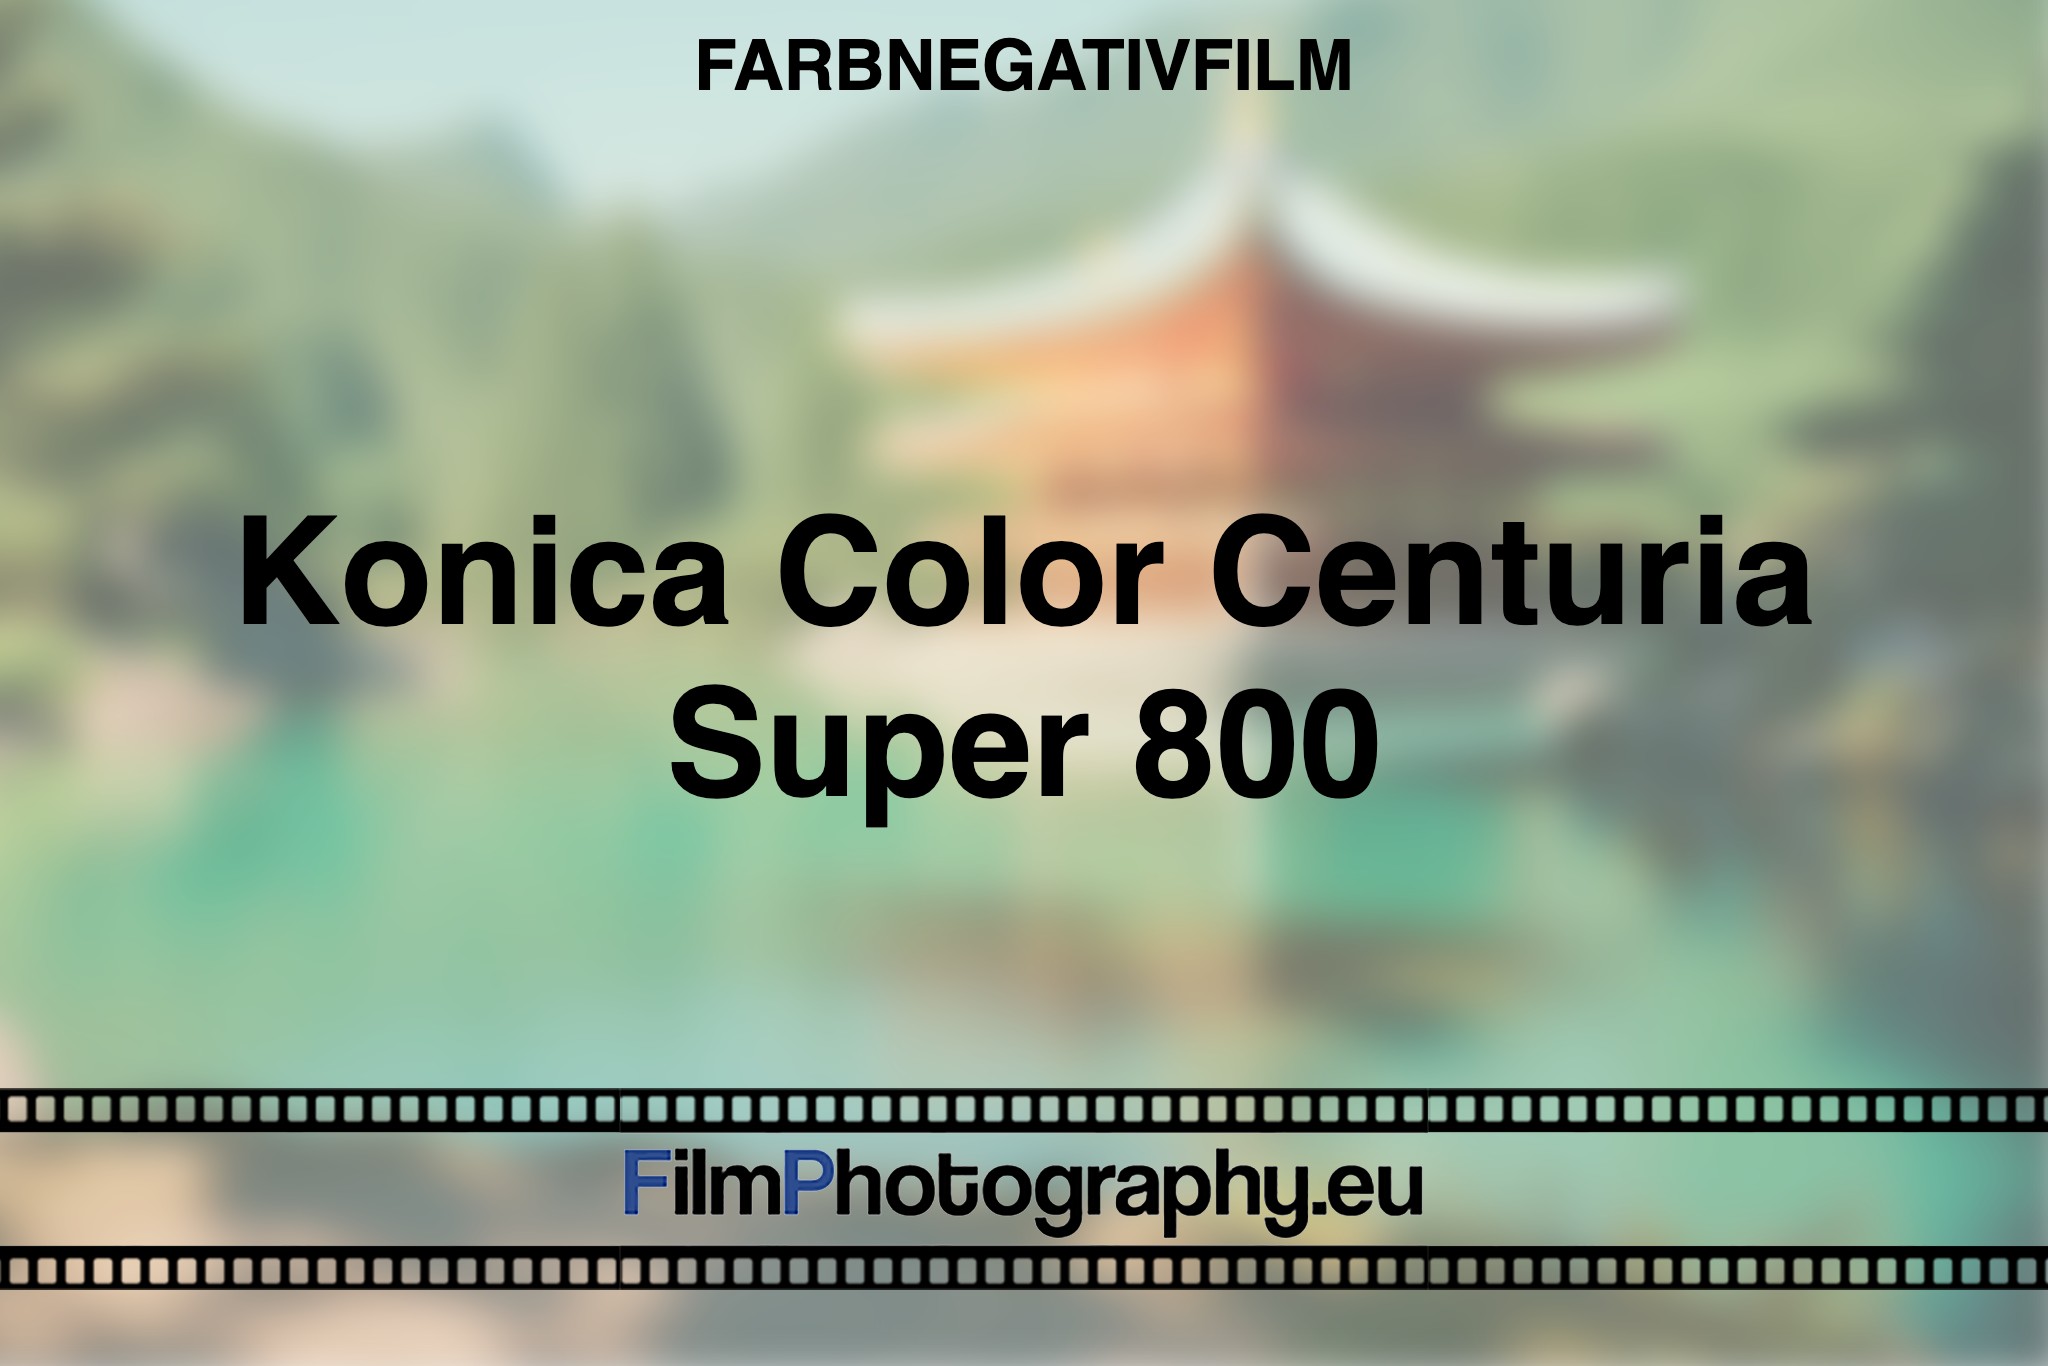 konica-color-centuria-super-800-farbnegativfilm-bnv